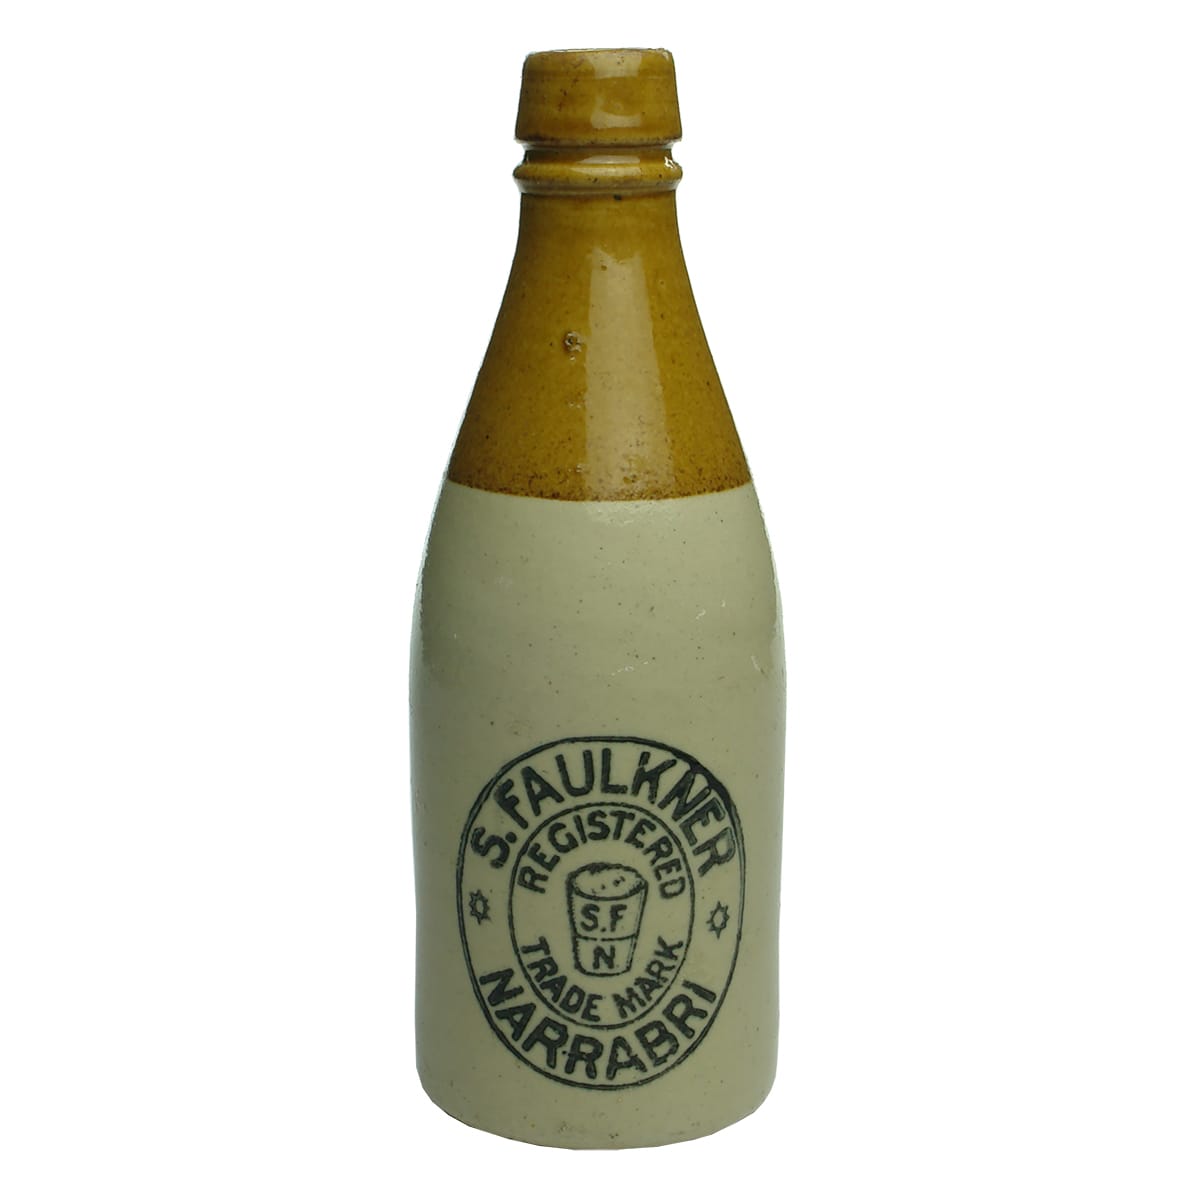 Ginger Beer. S. Faulkner, Narrabri. Cork stopper. Champagne. Tan top.